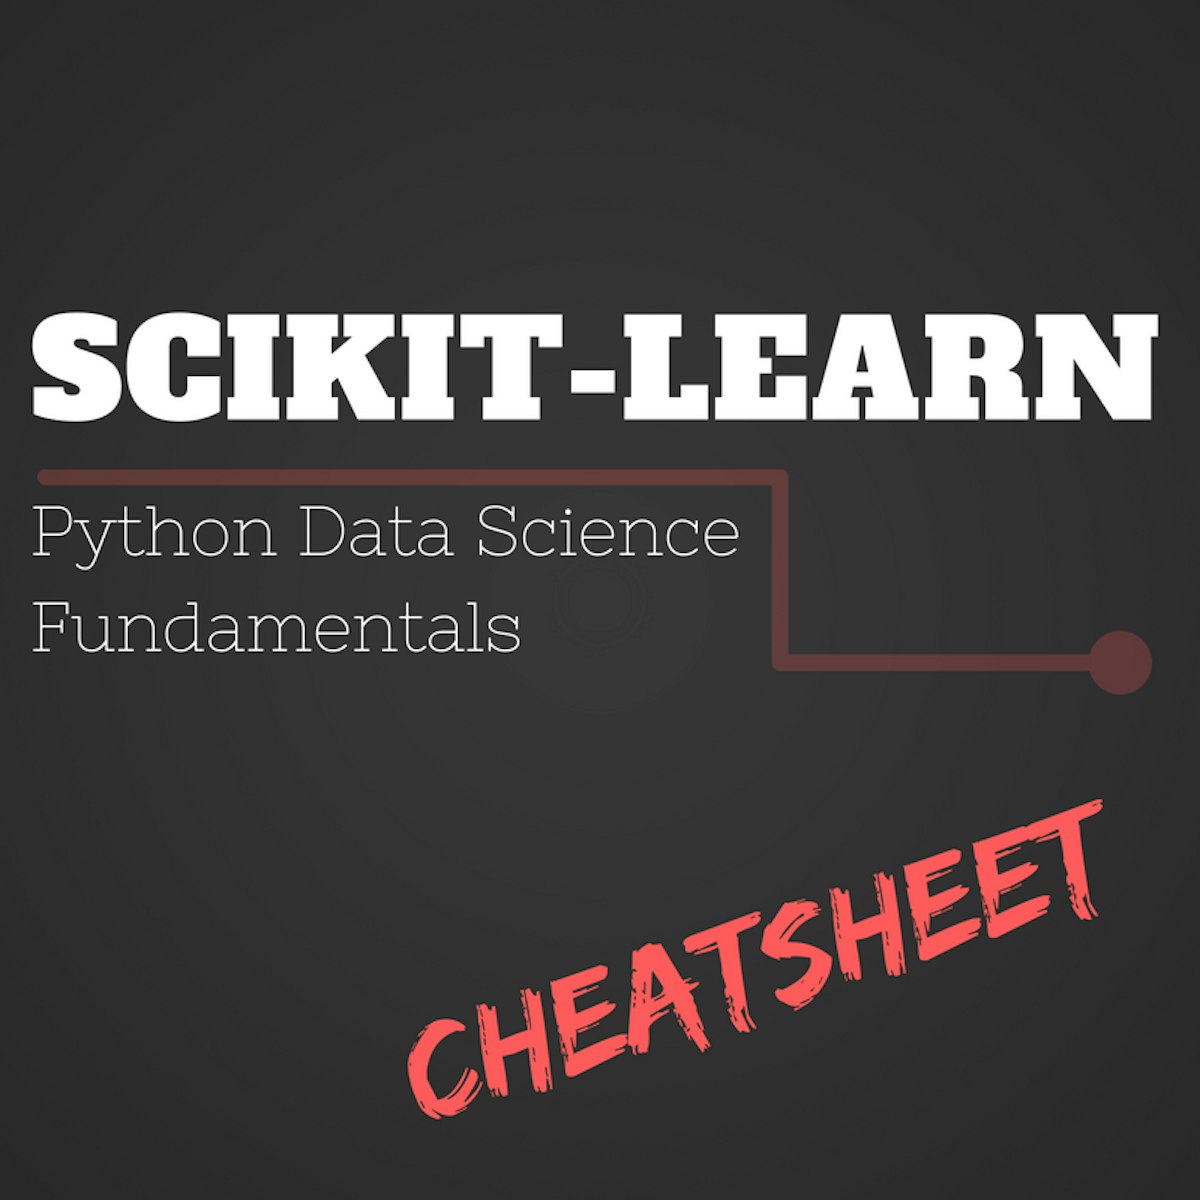 featured image - Fundamental Python Data Science Libraries: A Cheatsheet (Part 4/4)